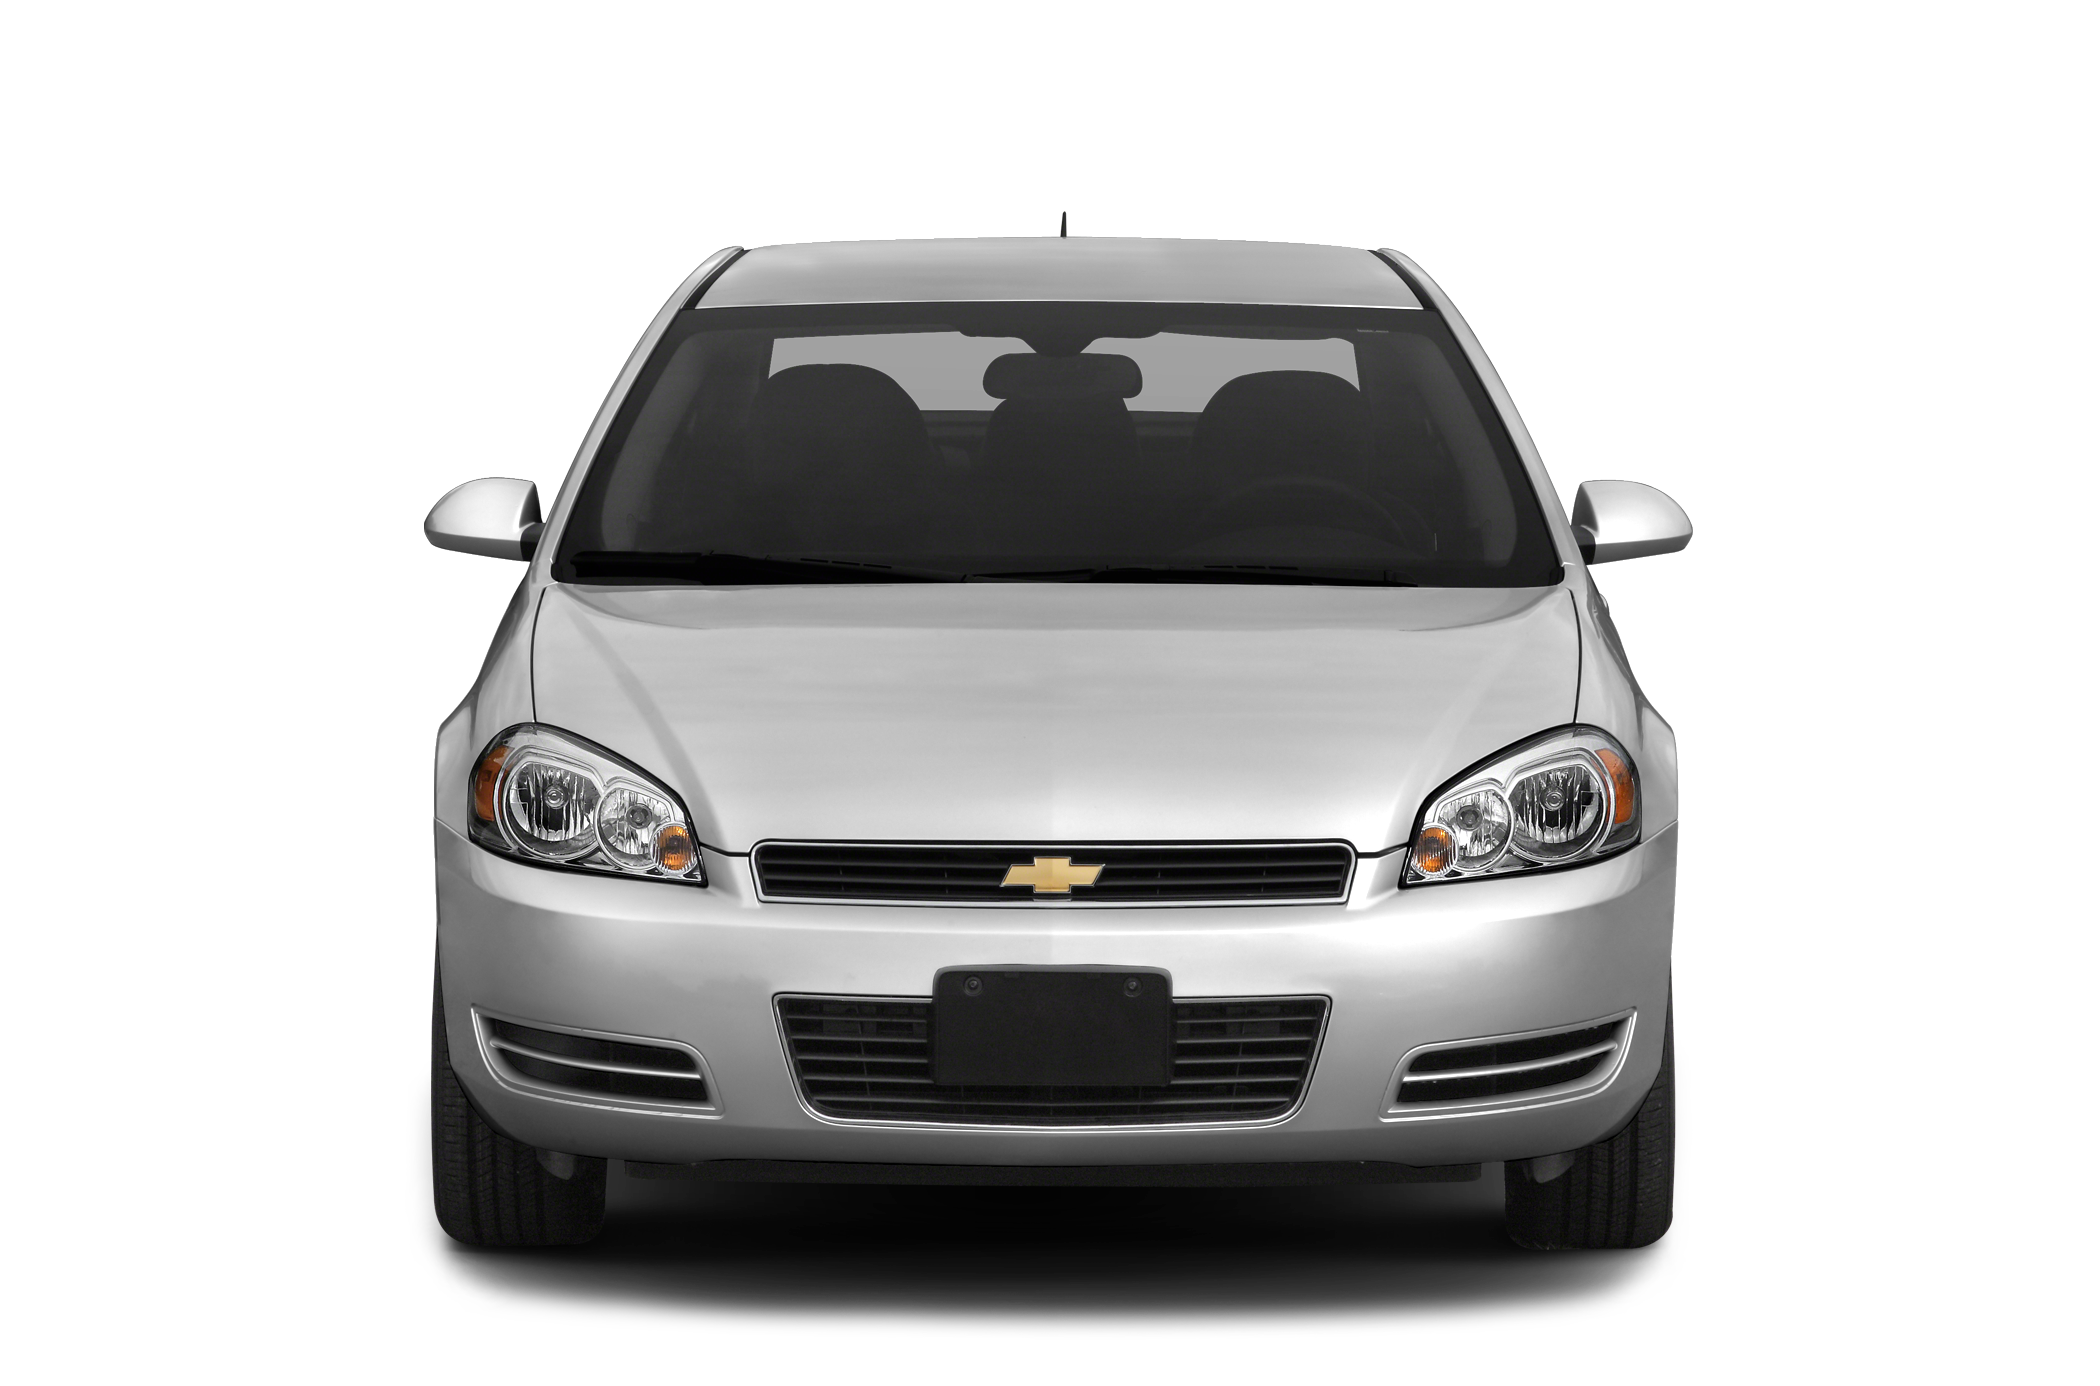 2015 Chevrolet Impala Limited